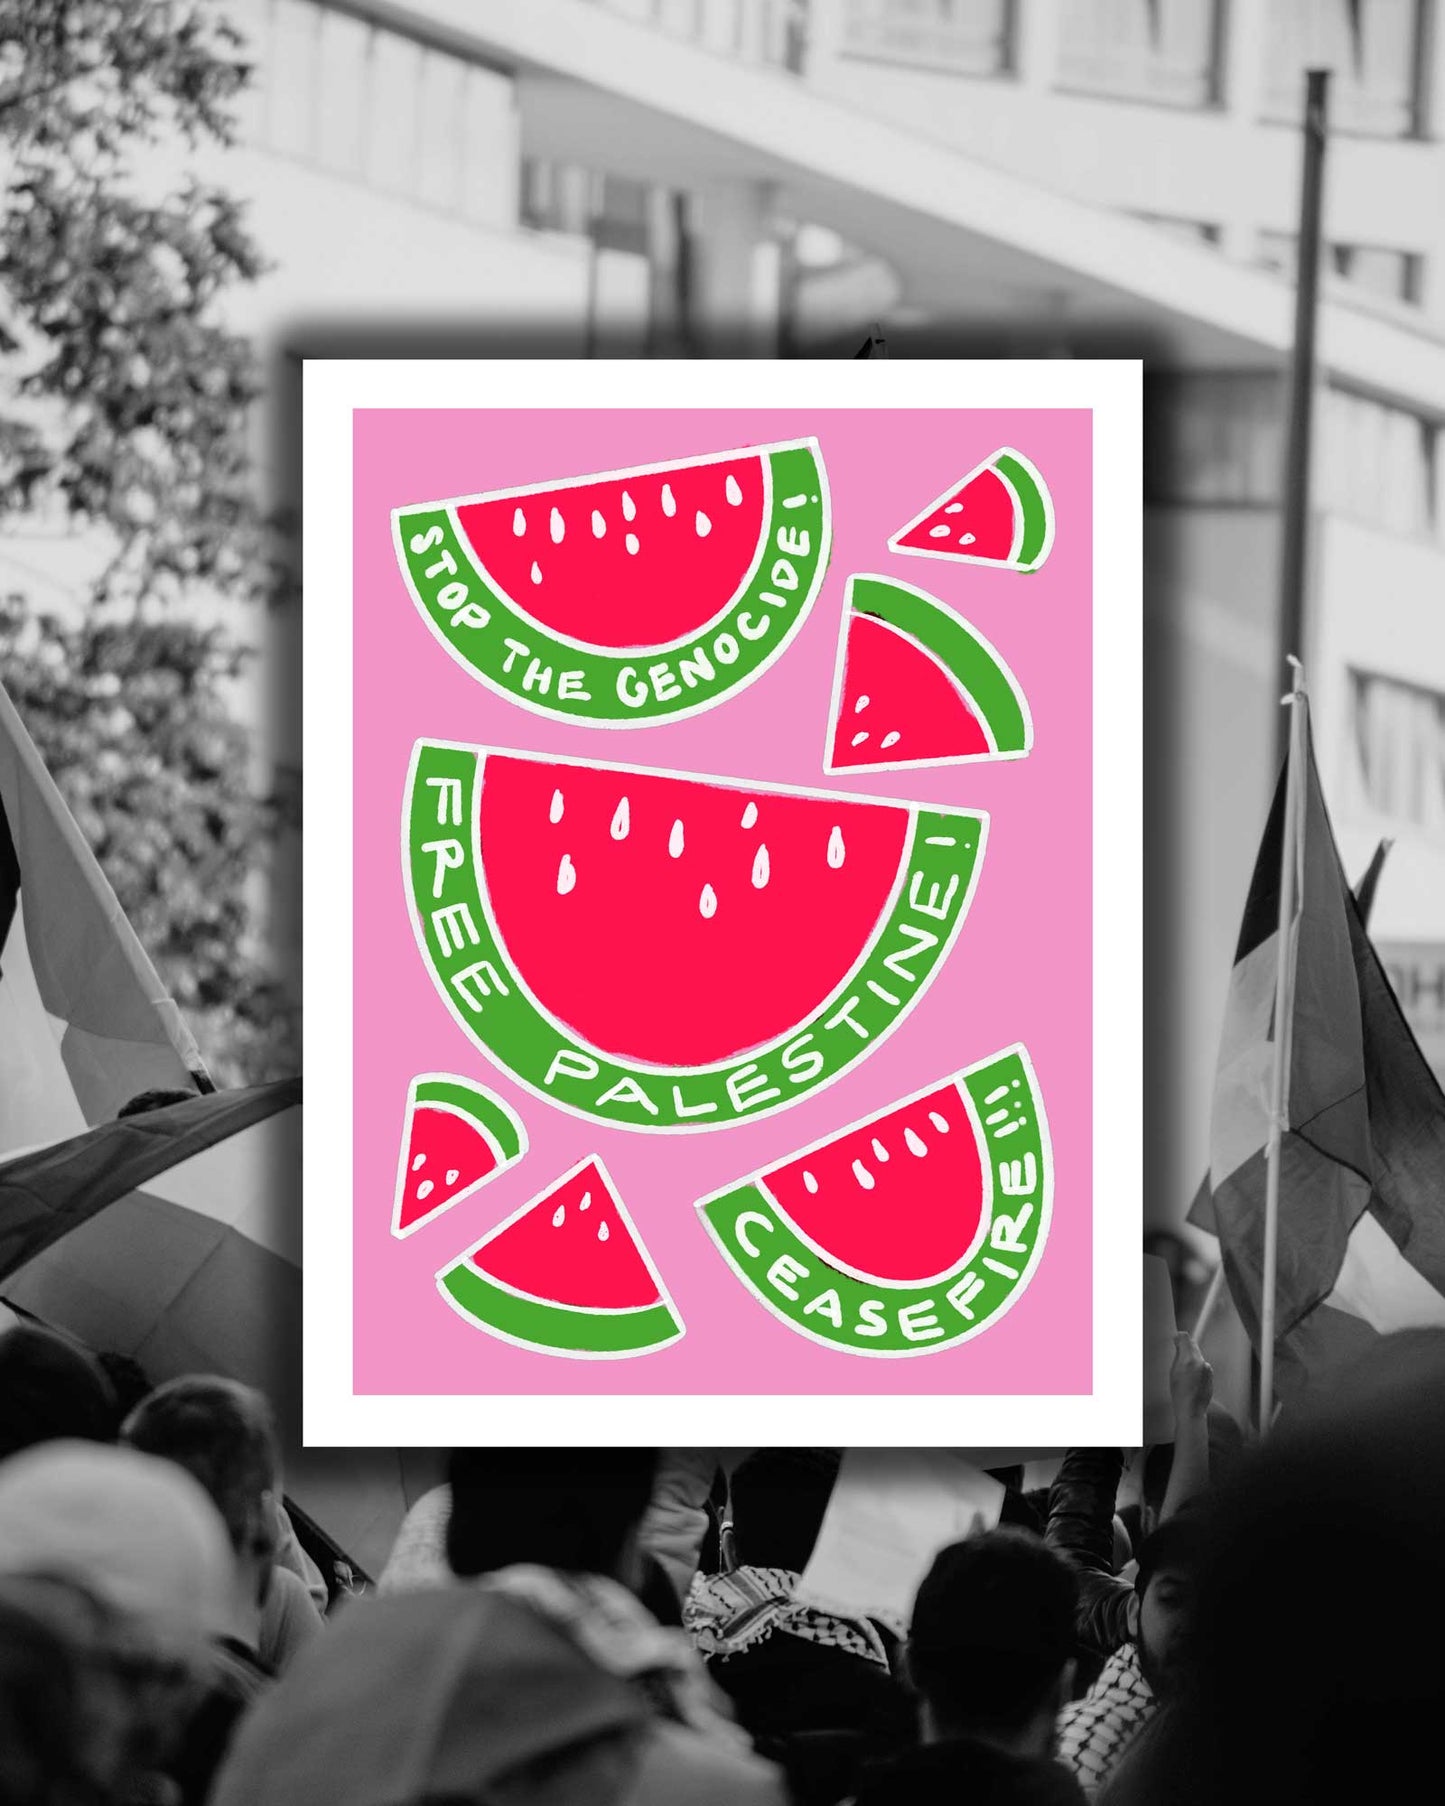 Watermelon Free Palestine Digital Protest Print